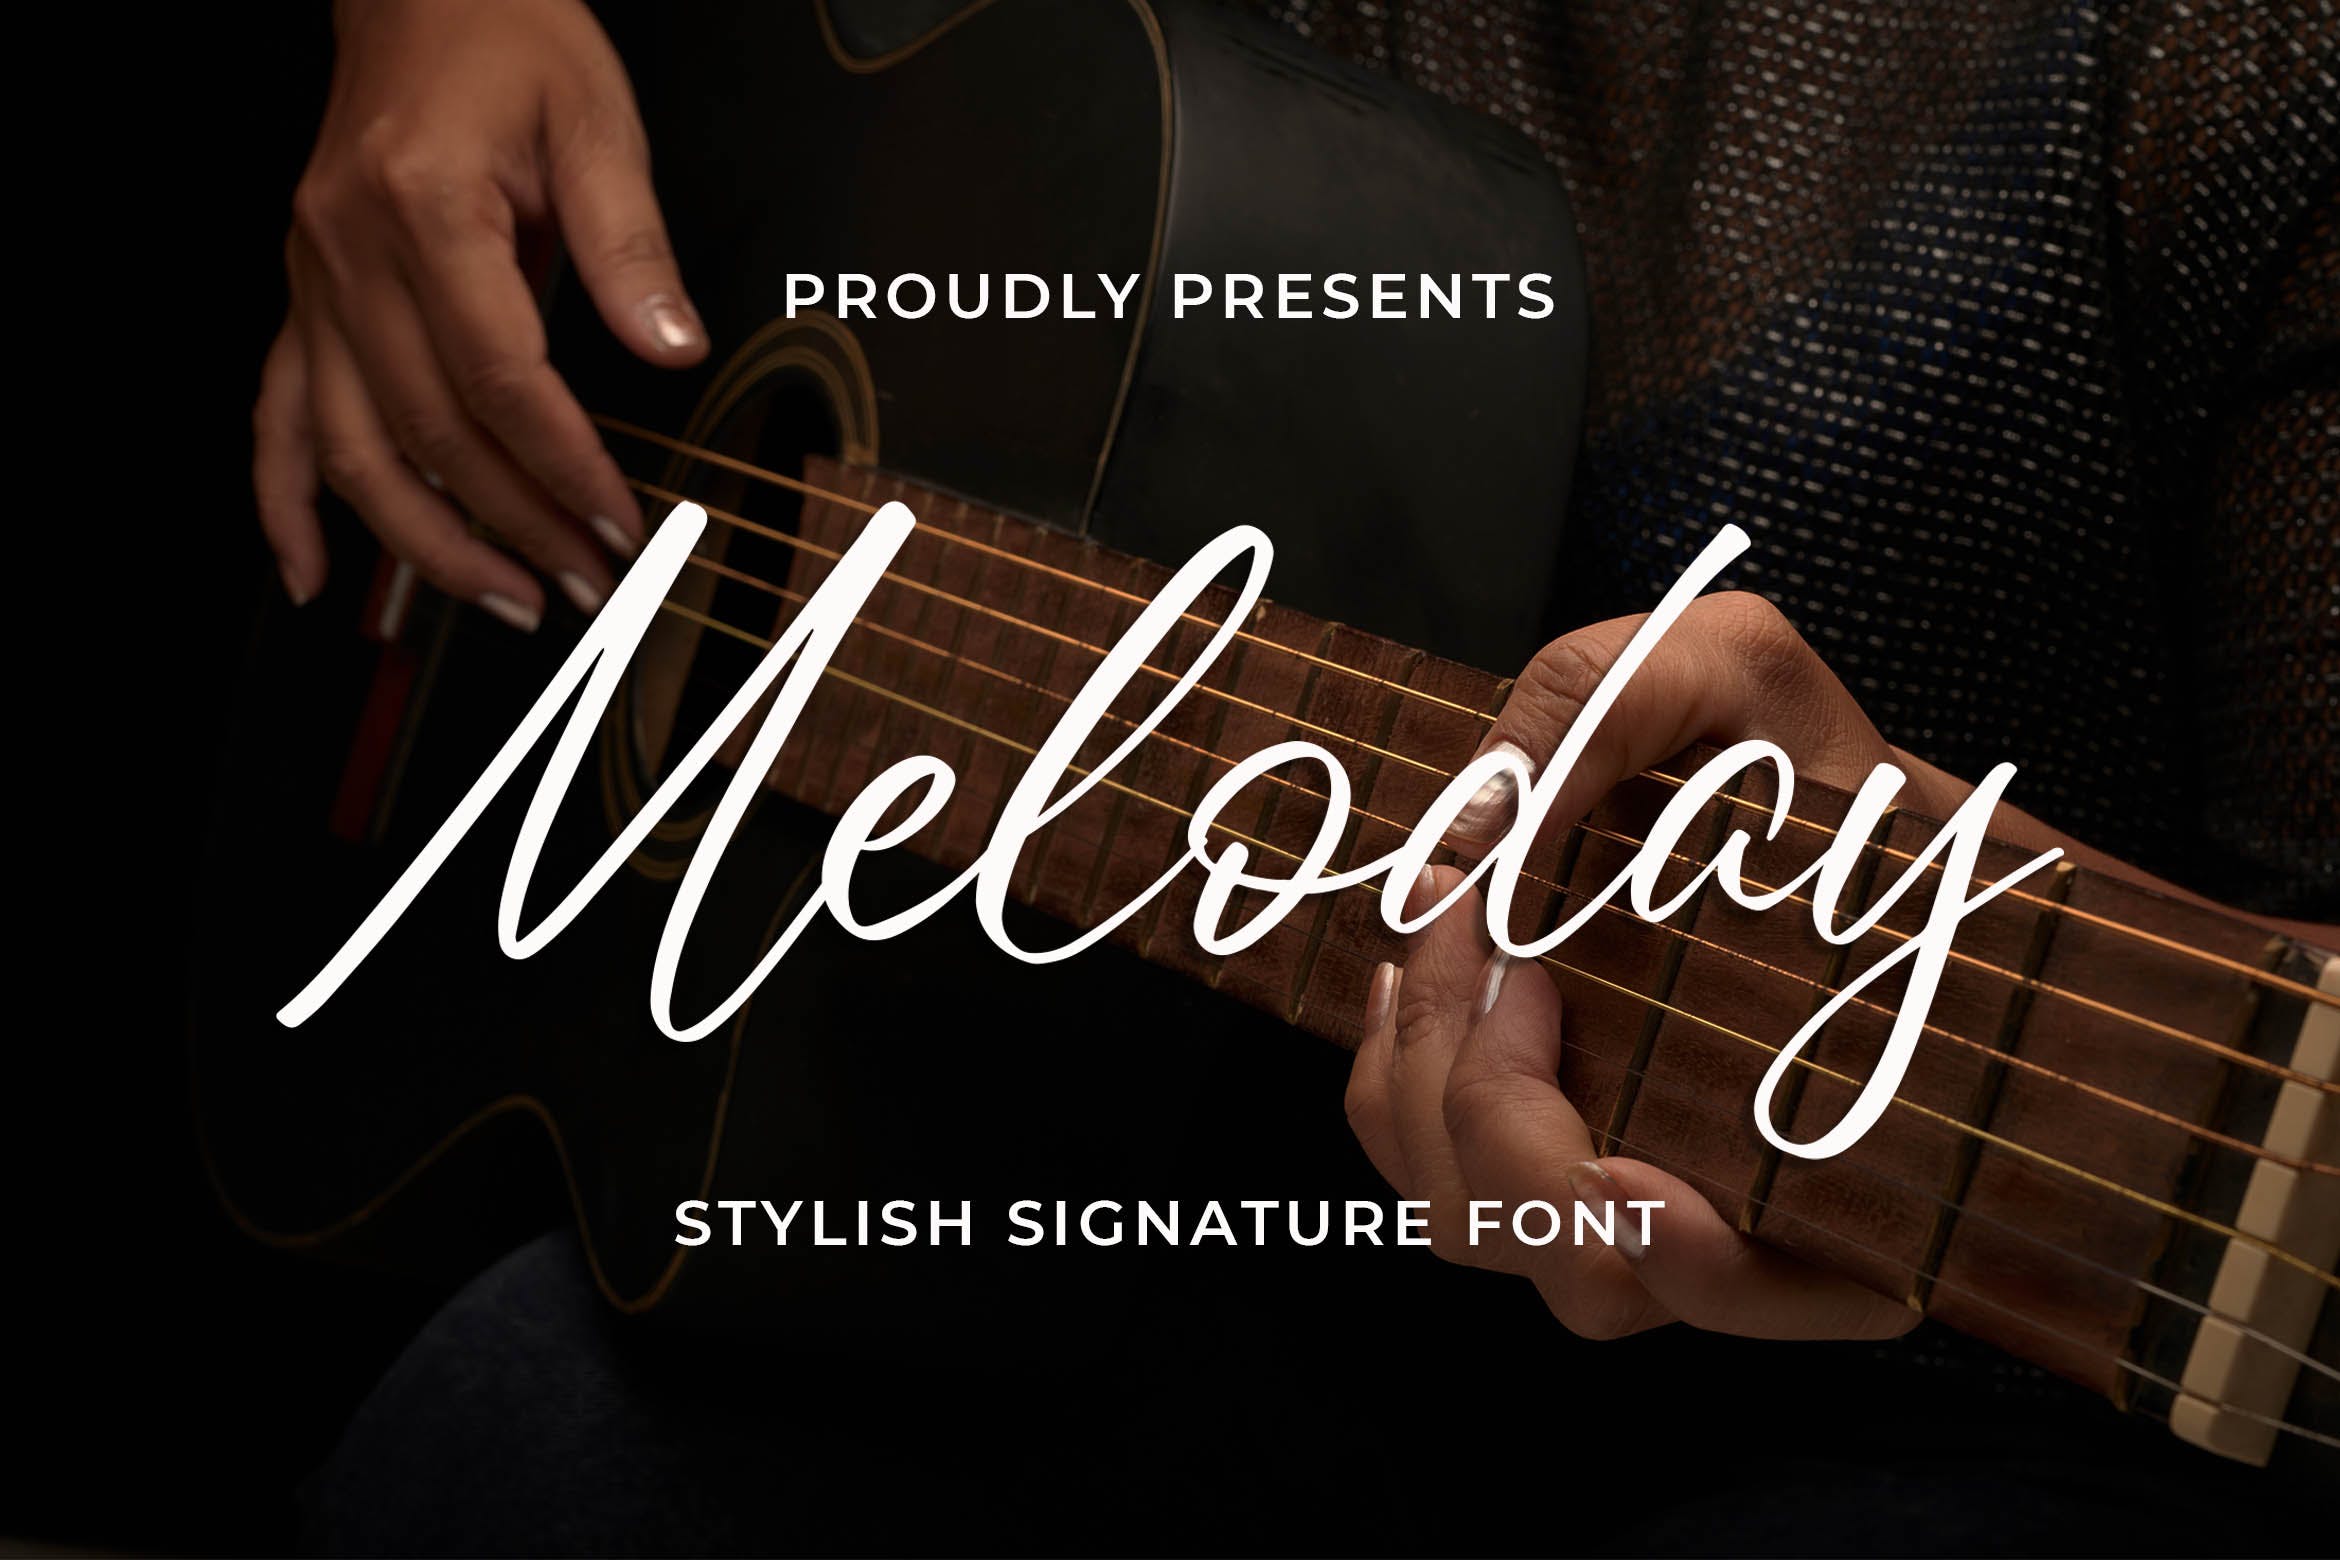 英文时尚签名手写字体大洋岛精选 Meloday – Stylish Signature Font插图